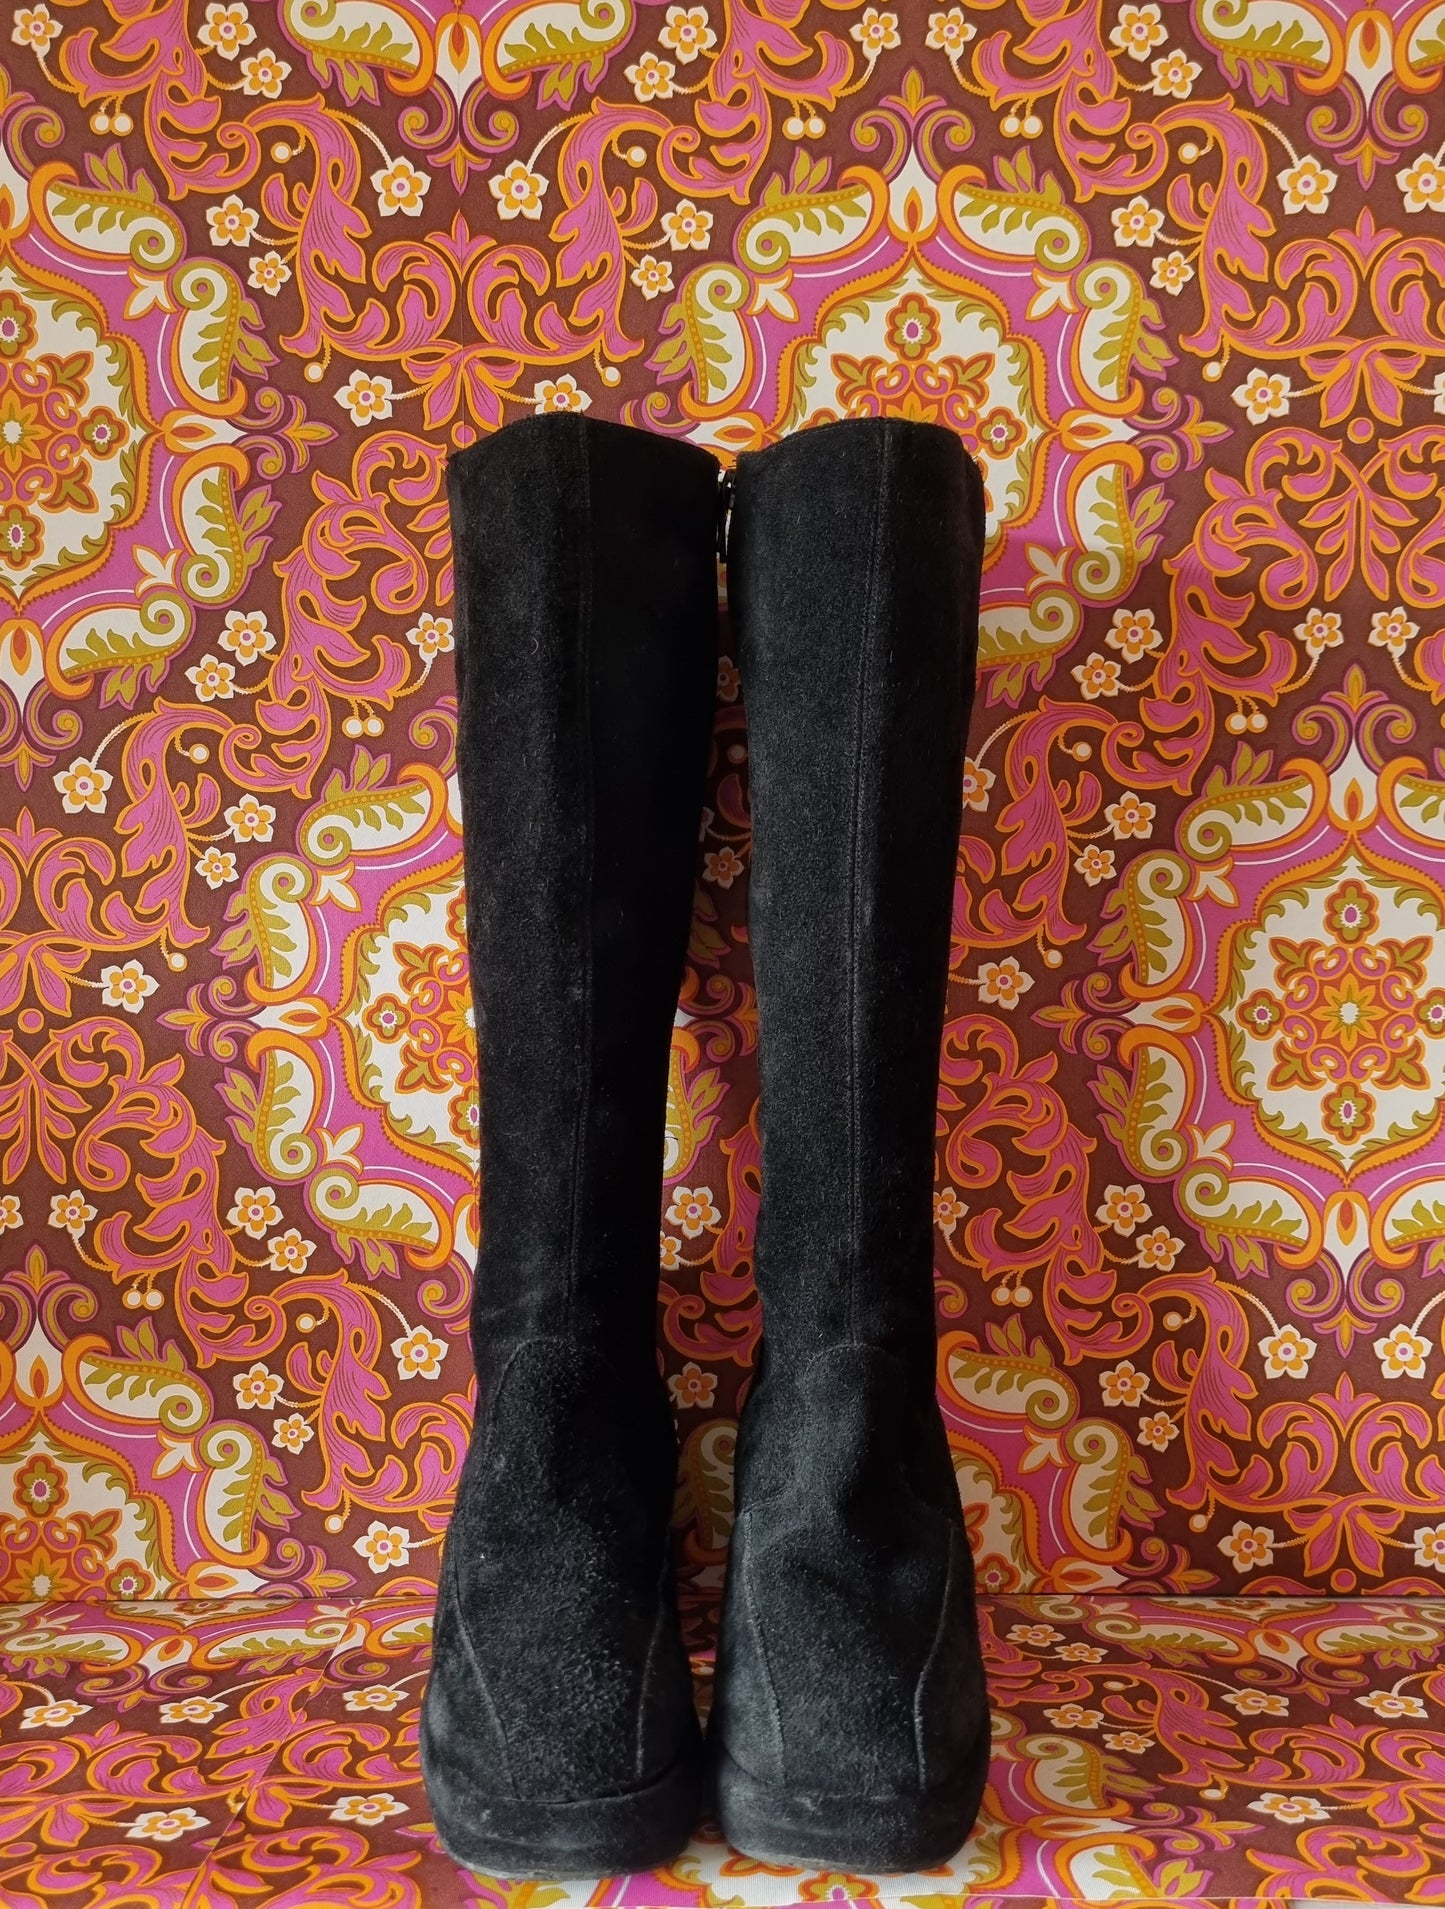 Vintage suede boots uk size 4 Eur 37 us 6